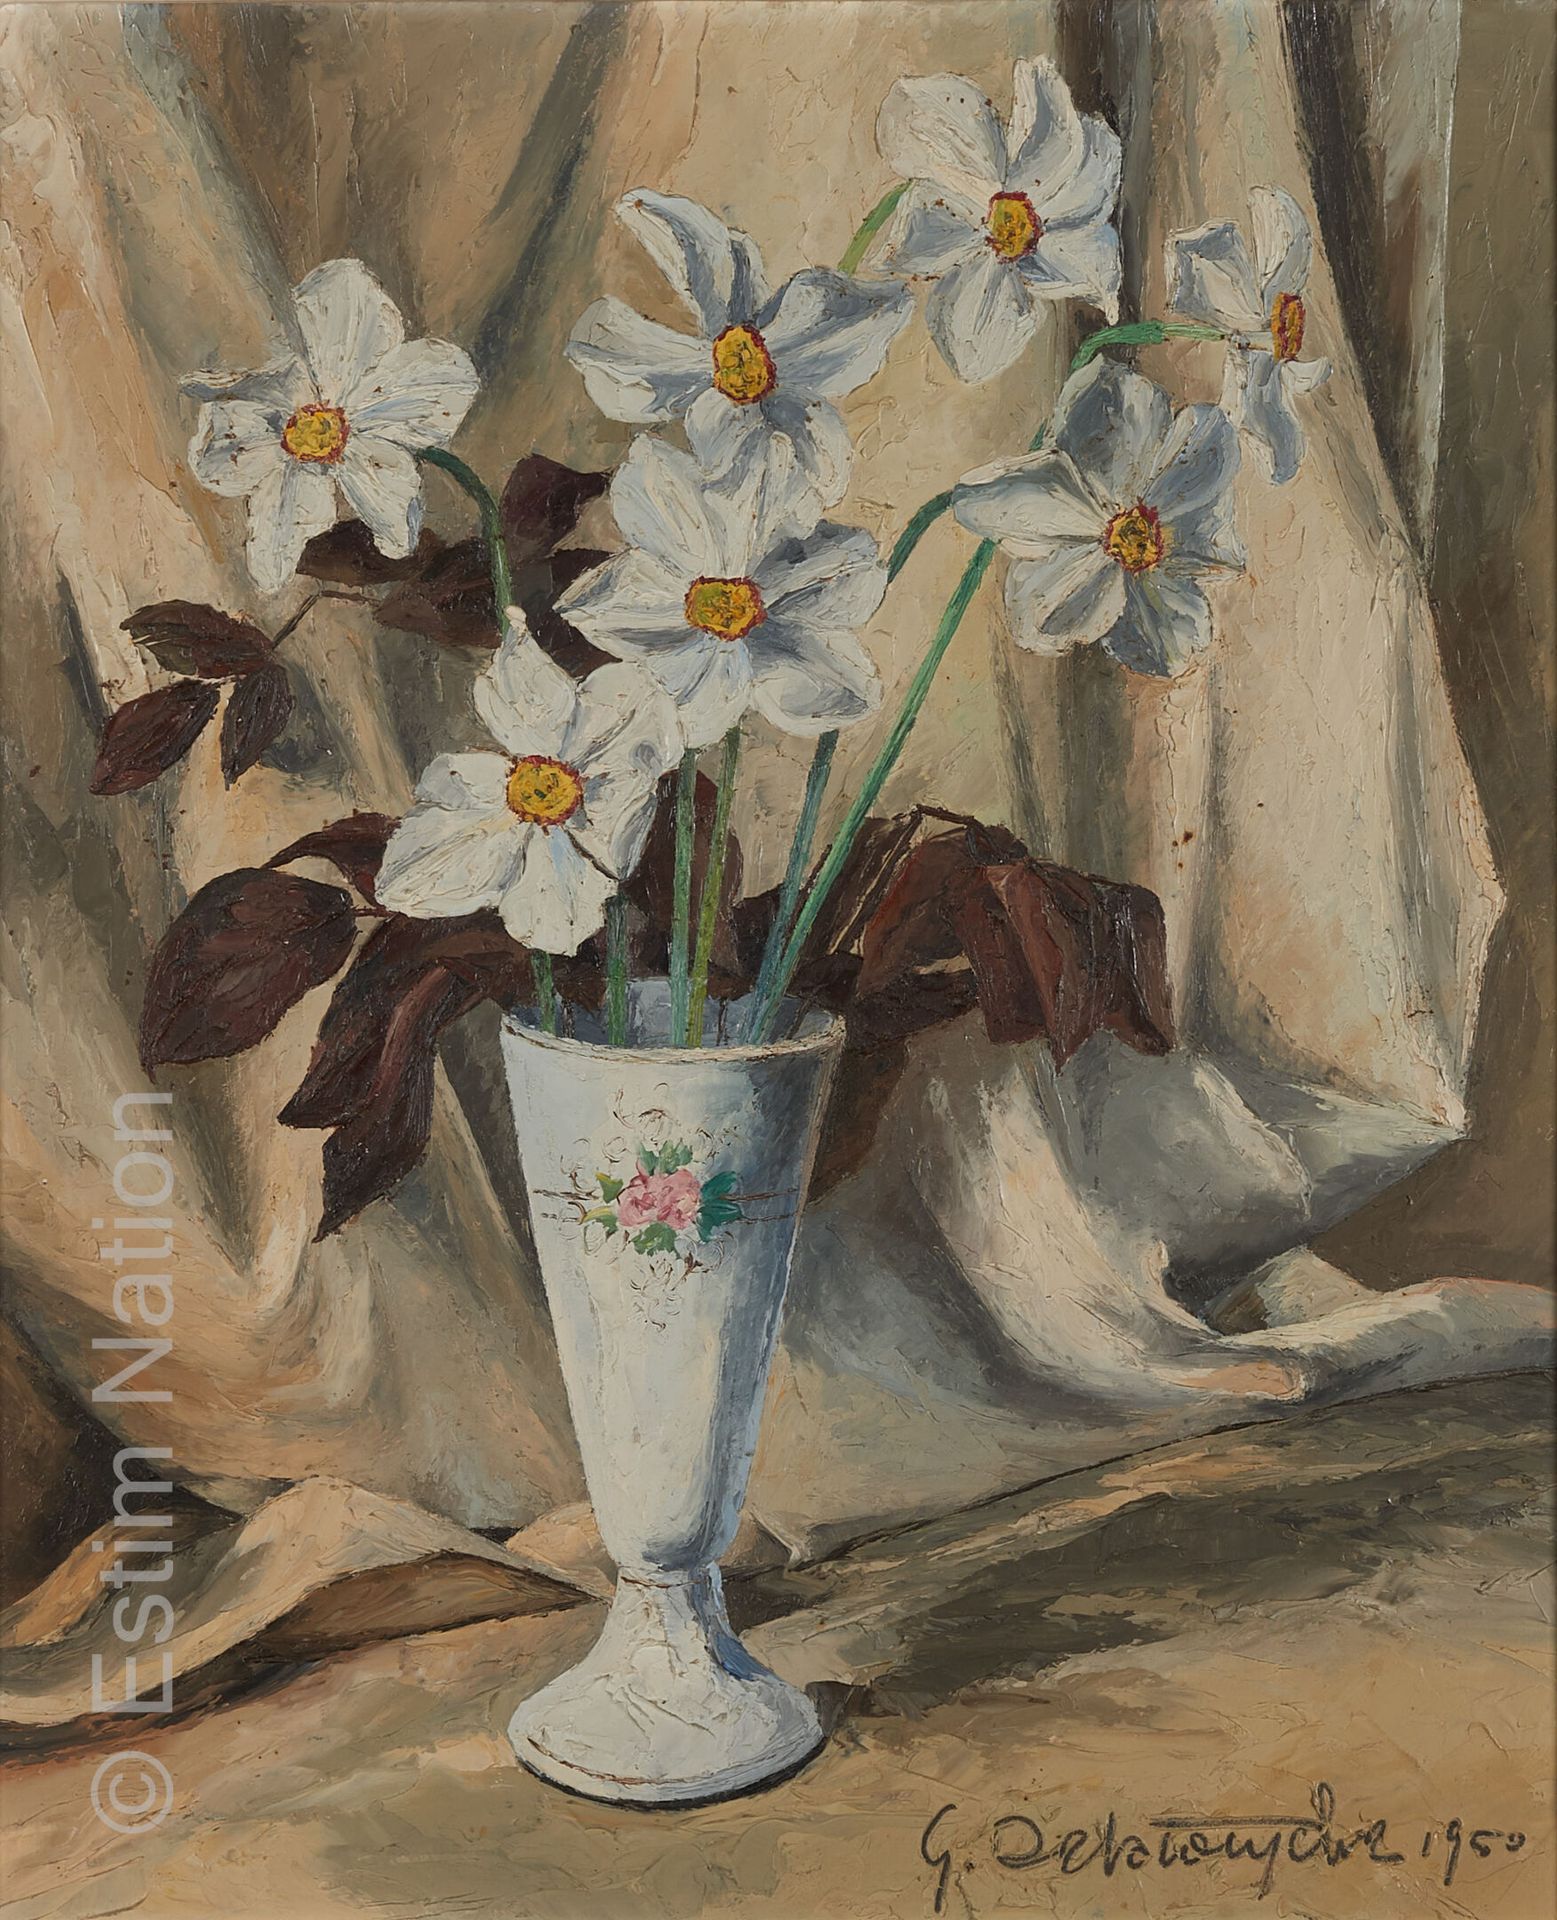 ART DU XXE SIECLE Germain DELATOUSCHE (1898-1966)

"Narciso
Natura morta con fio&hellip;